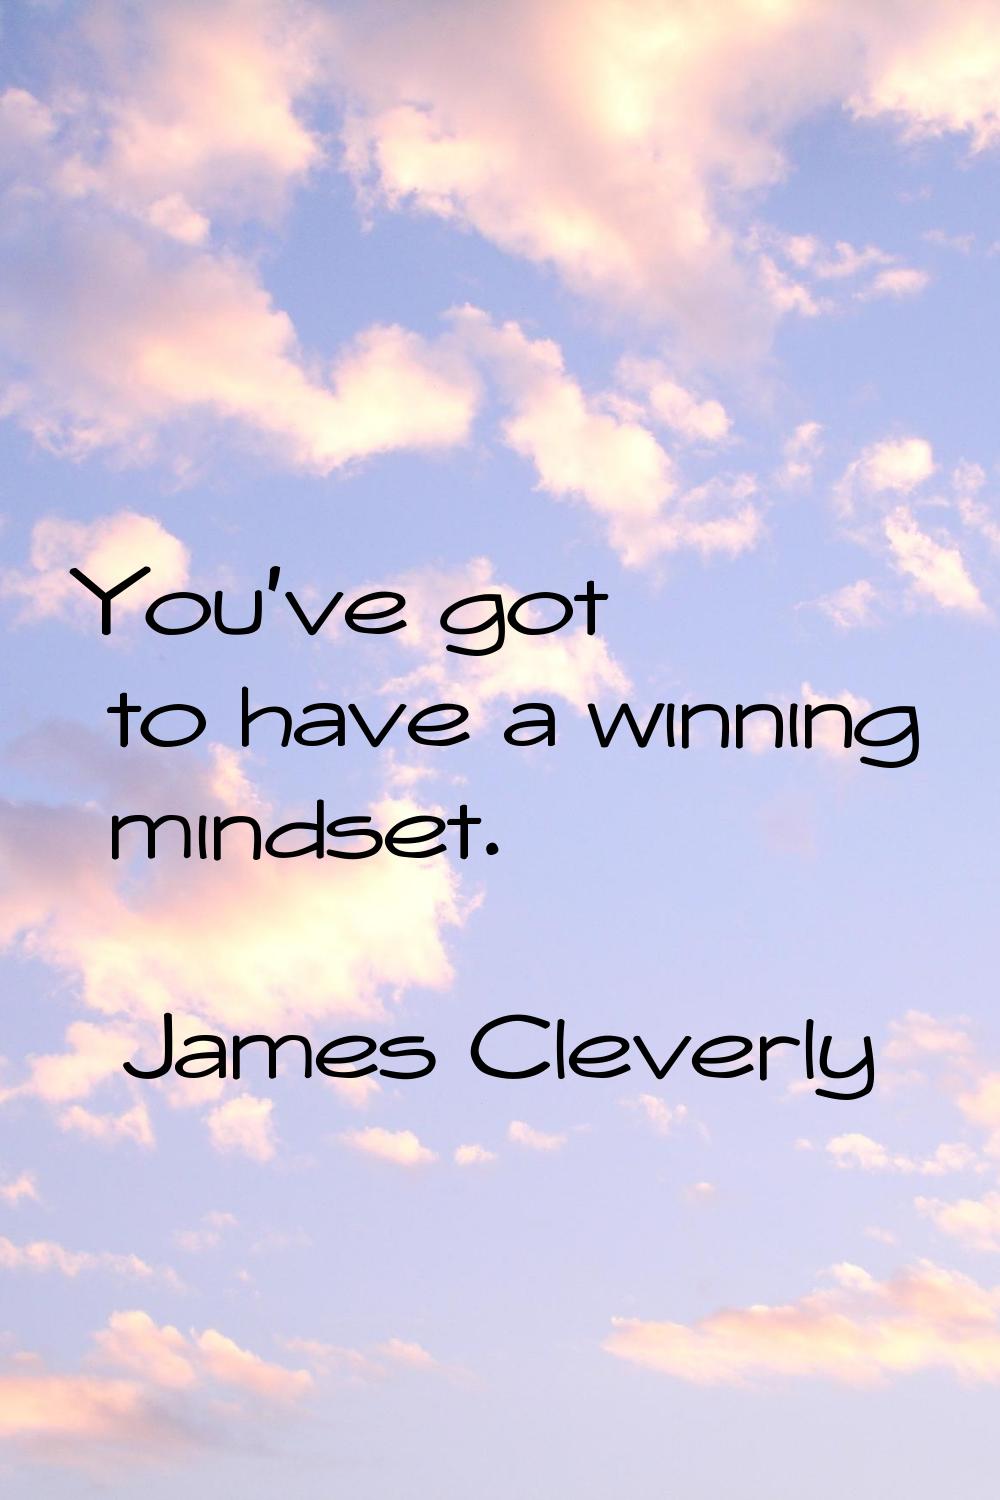 You've got to have a winning mindset.